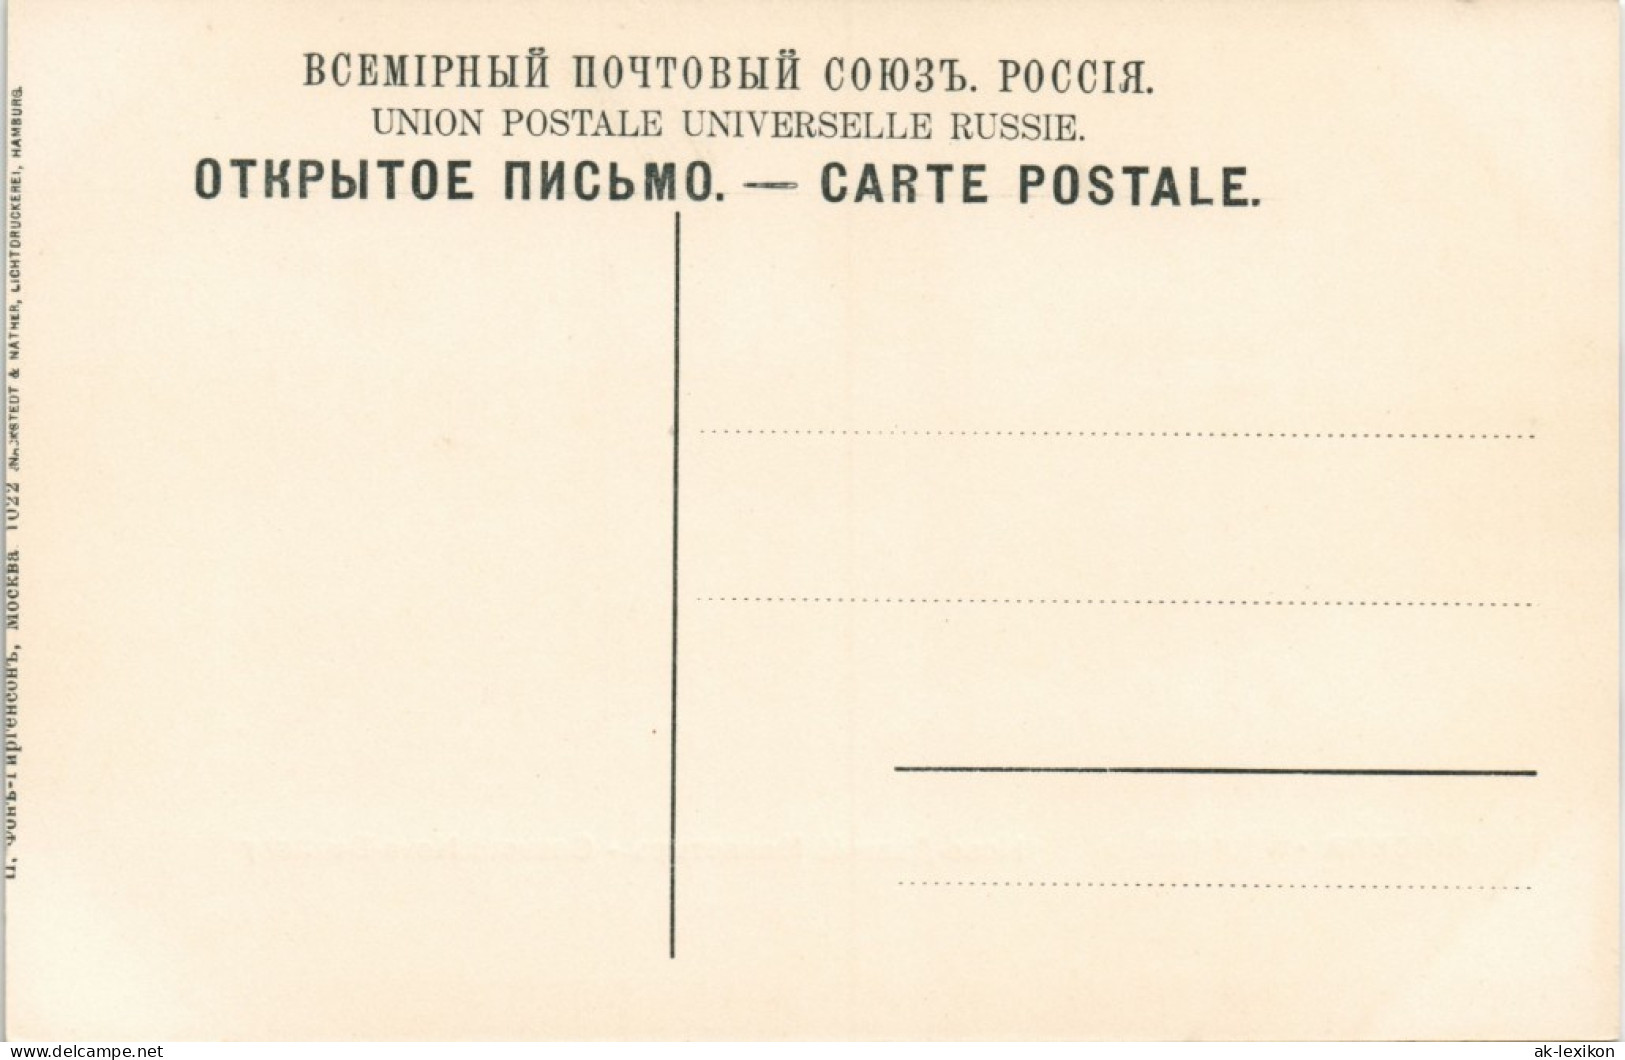 Moskau Москва́ Ново-Дѣвичій Монастырь - Couvent Novo-Devitchy 1907 - Russia